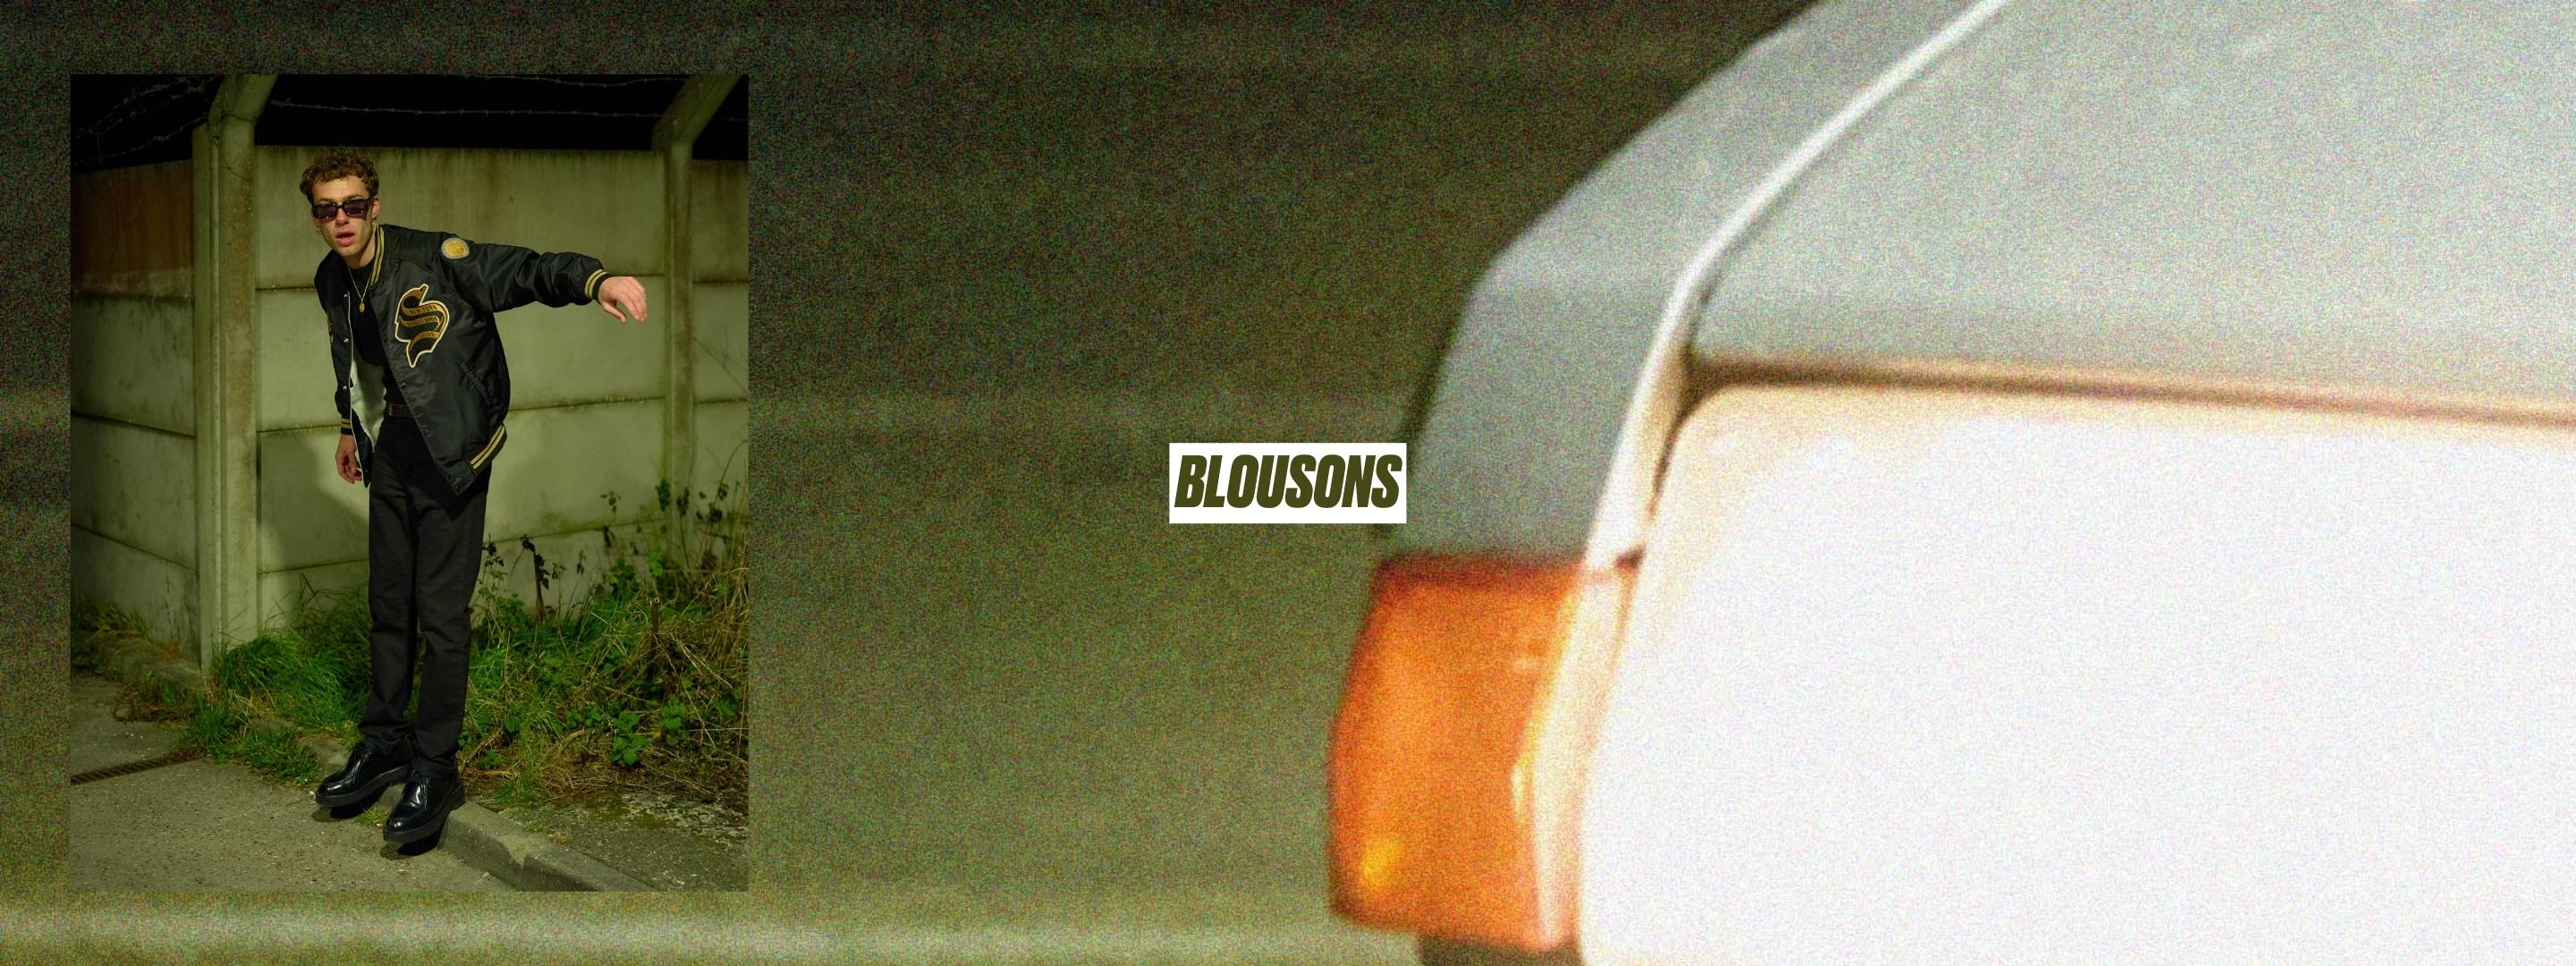 Blousons